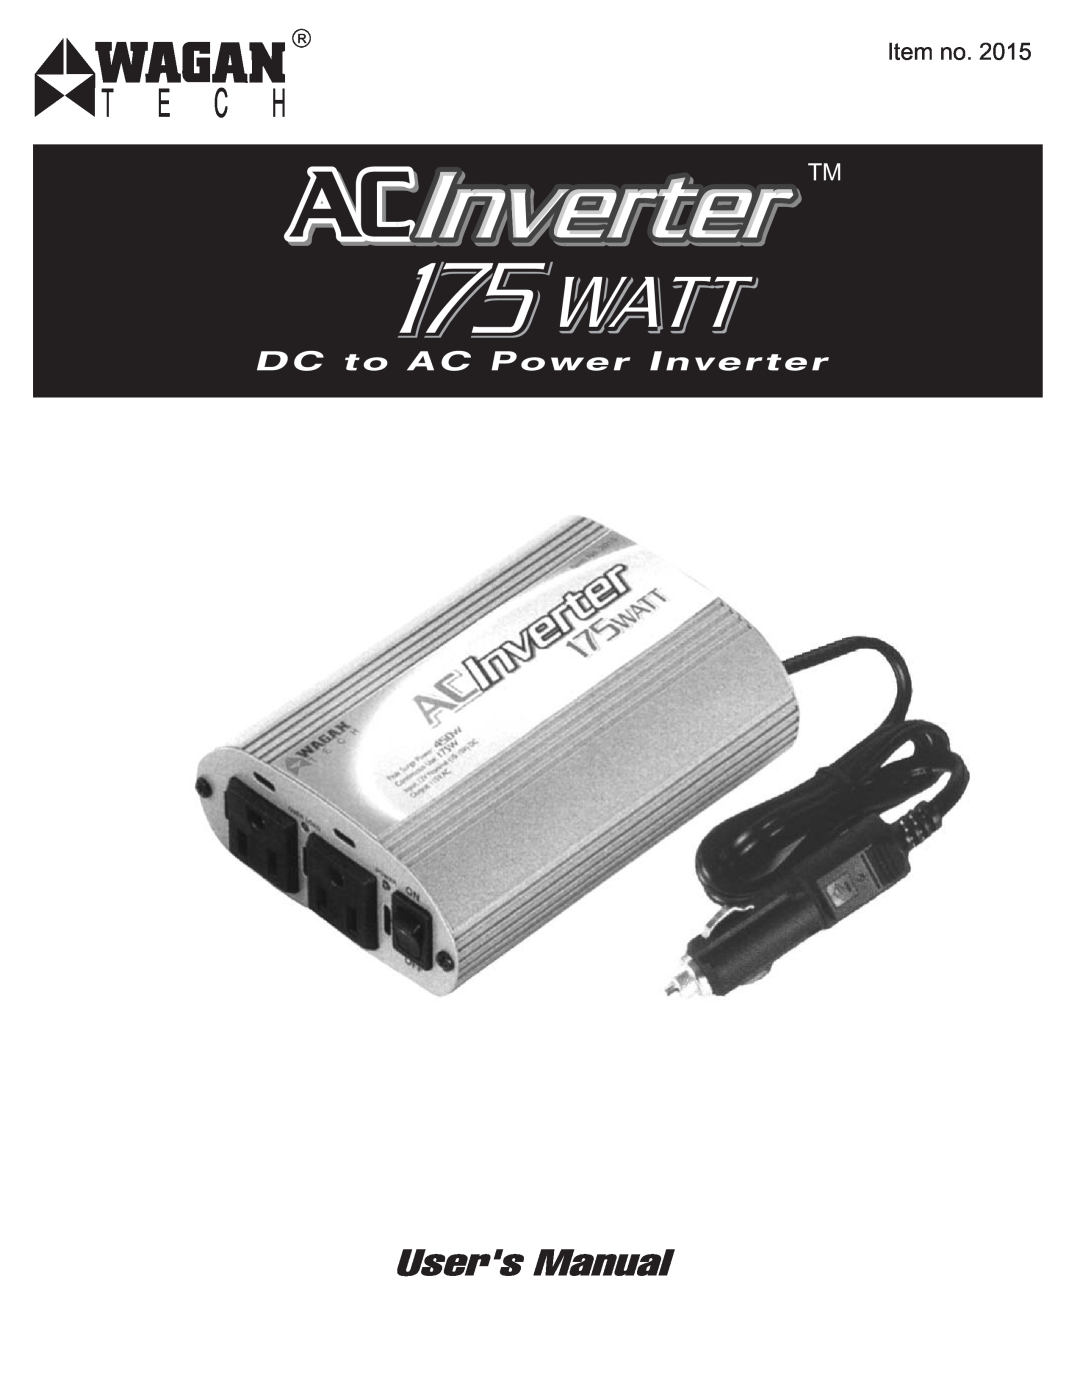 Wagan 175 Watt AC to DC Power Inverter user manual Users Manual, Item no 